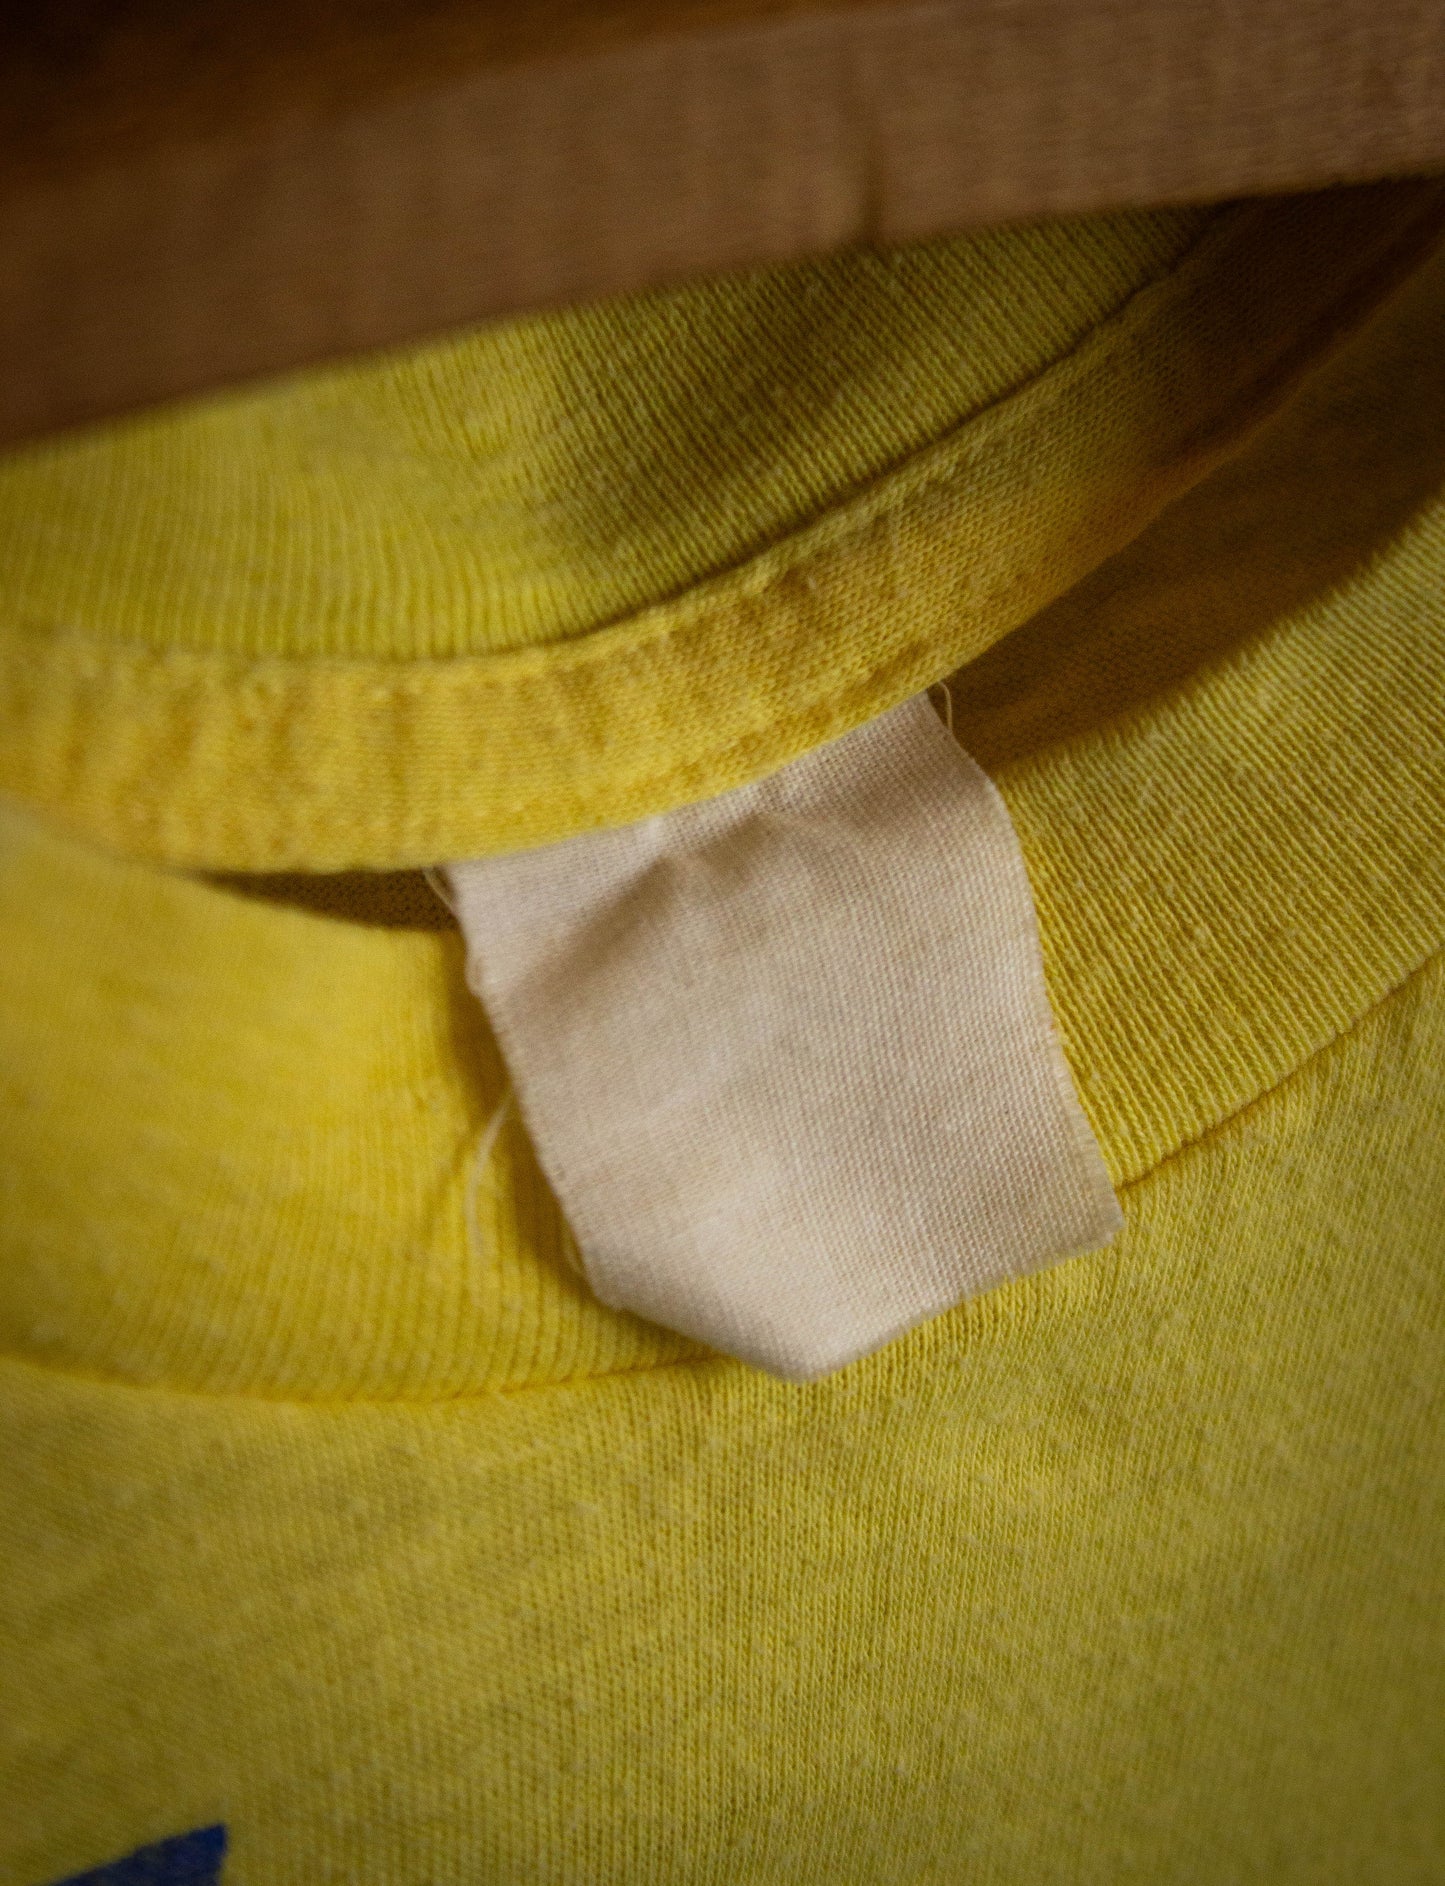 Vintage Lone Star State Graphic T Shirt 80s Yellow Medium 